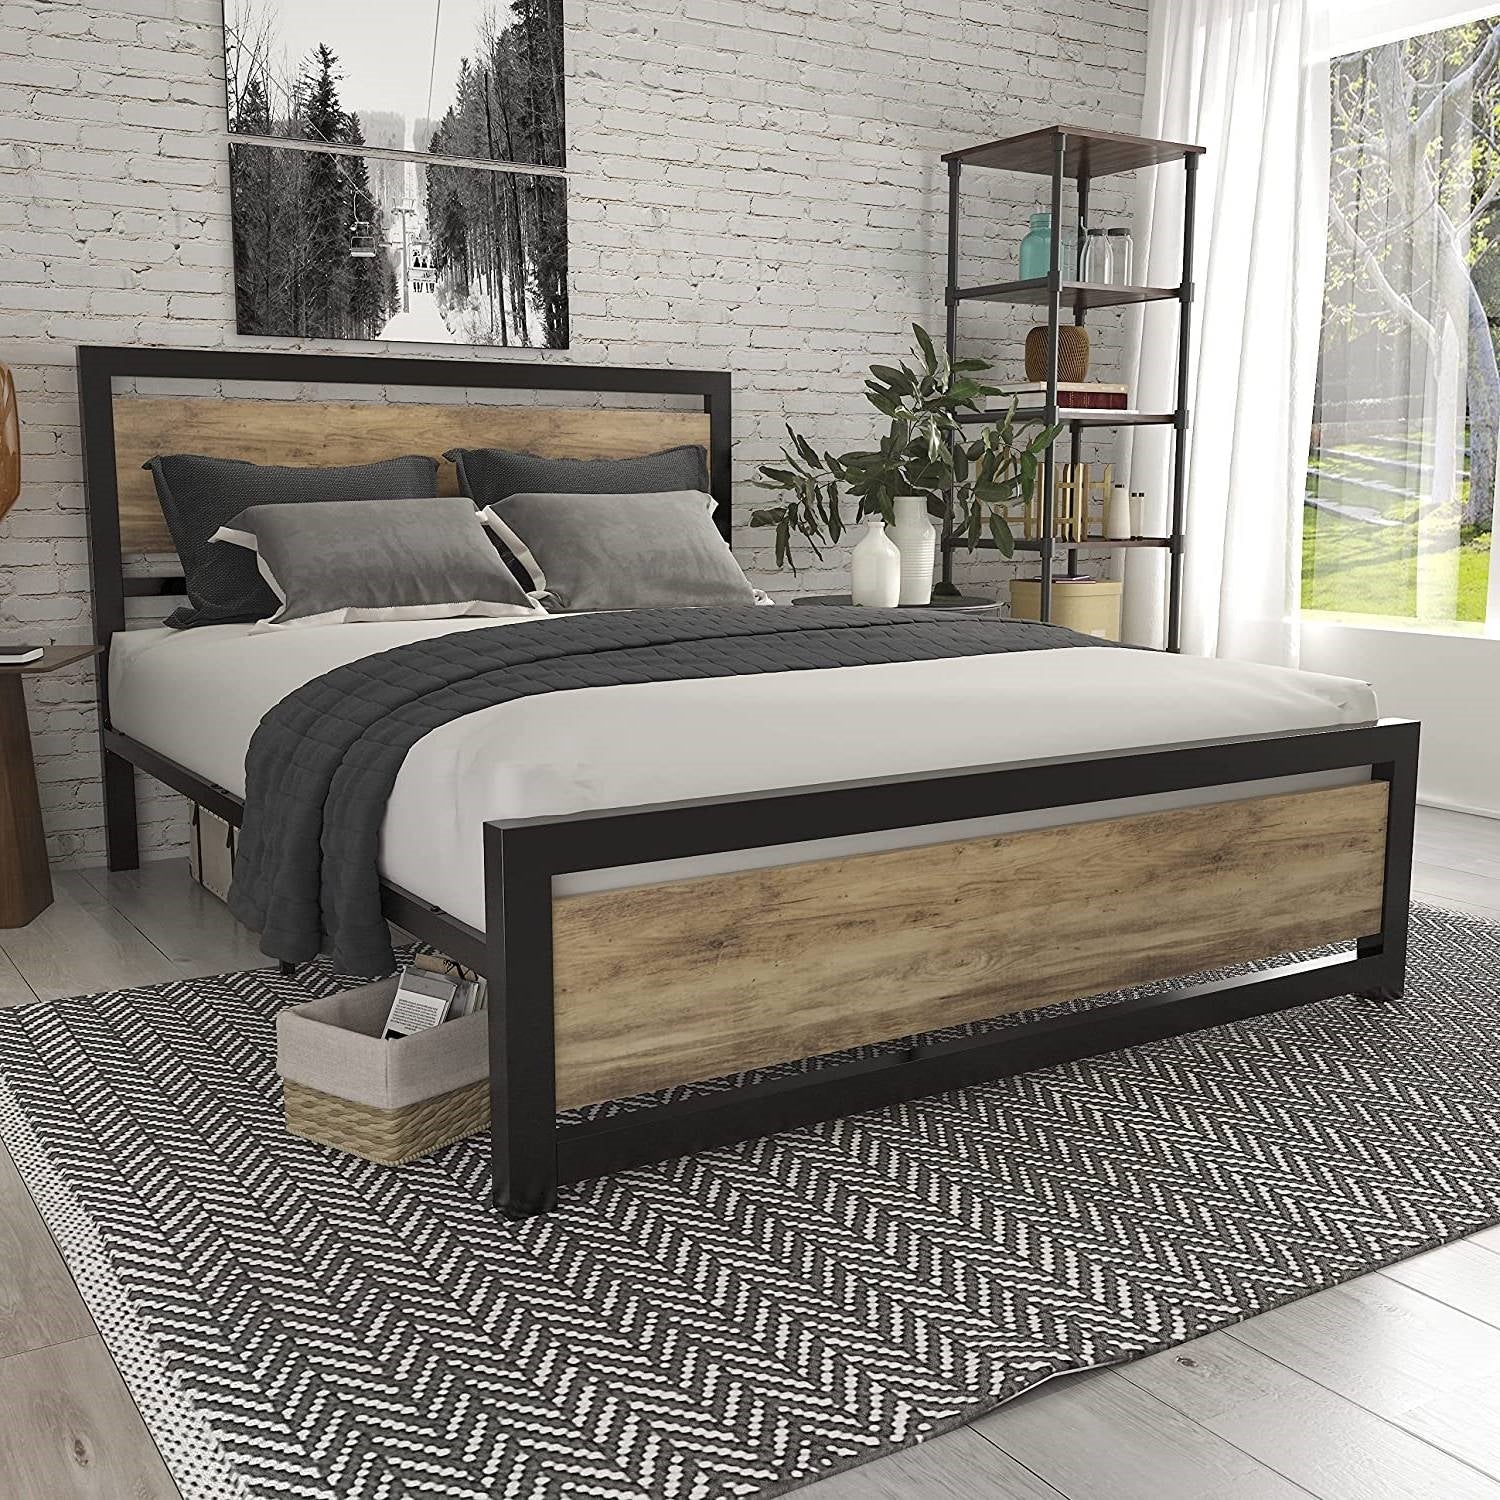 Bedroom > Bed Frames > Platform Beds - Queen Metal Platform Bed Frame With Brown Wood Panel Headboard And Footboard